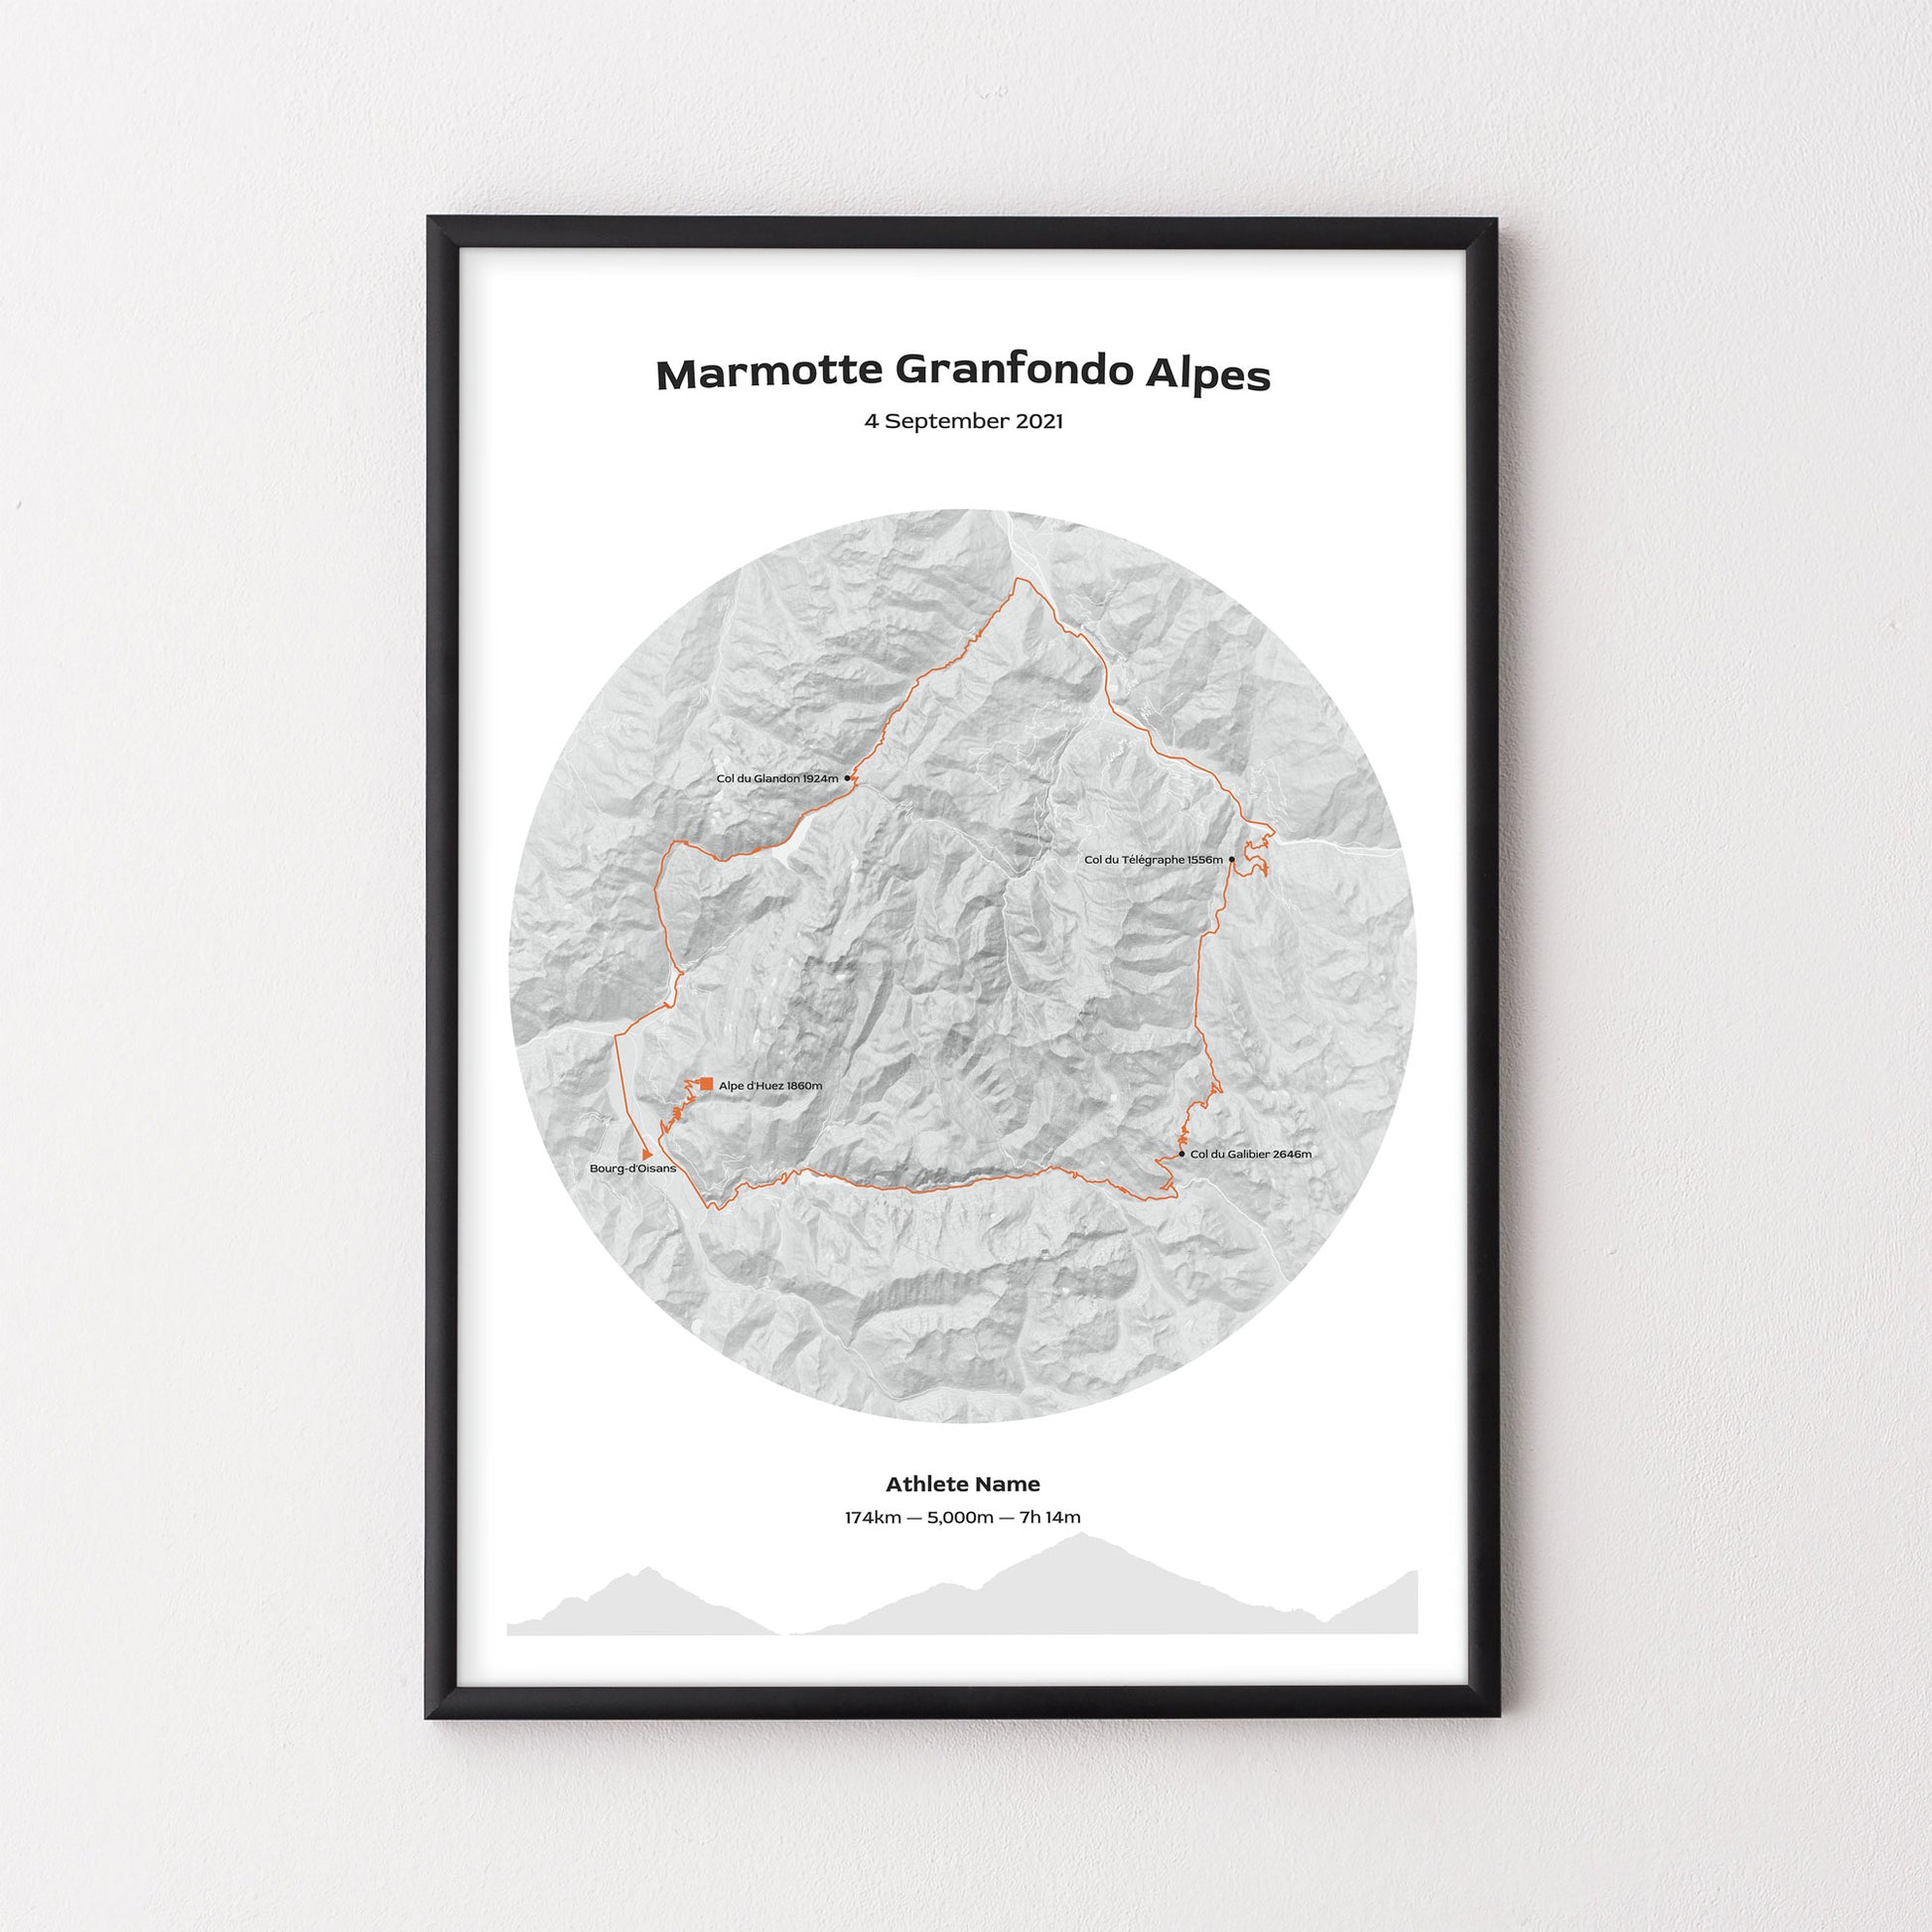 Marmotte Granfondo Alpes | Poster | The English Cyclist